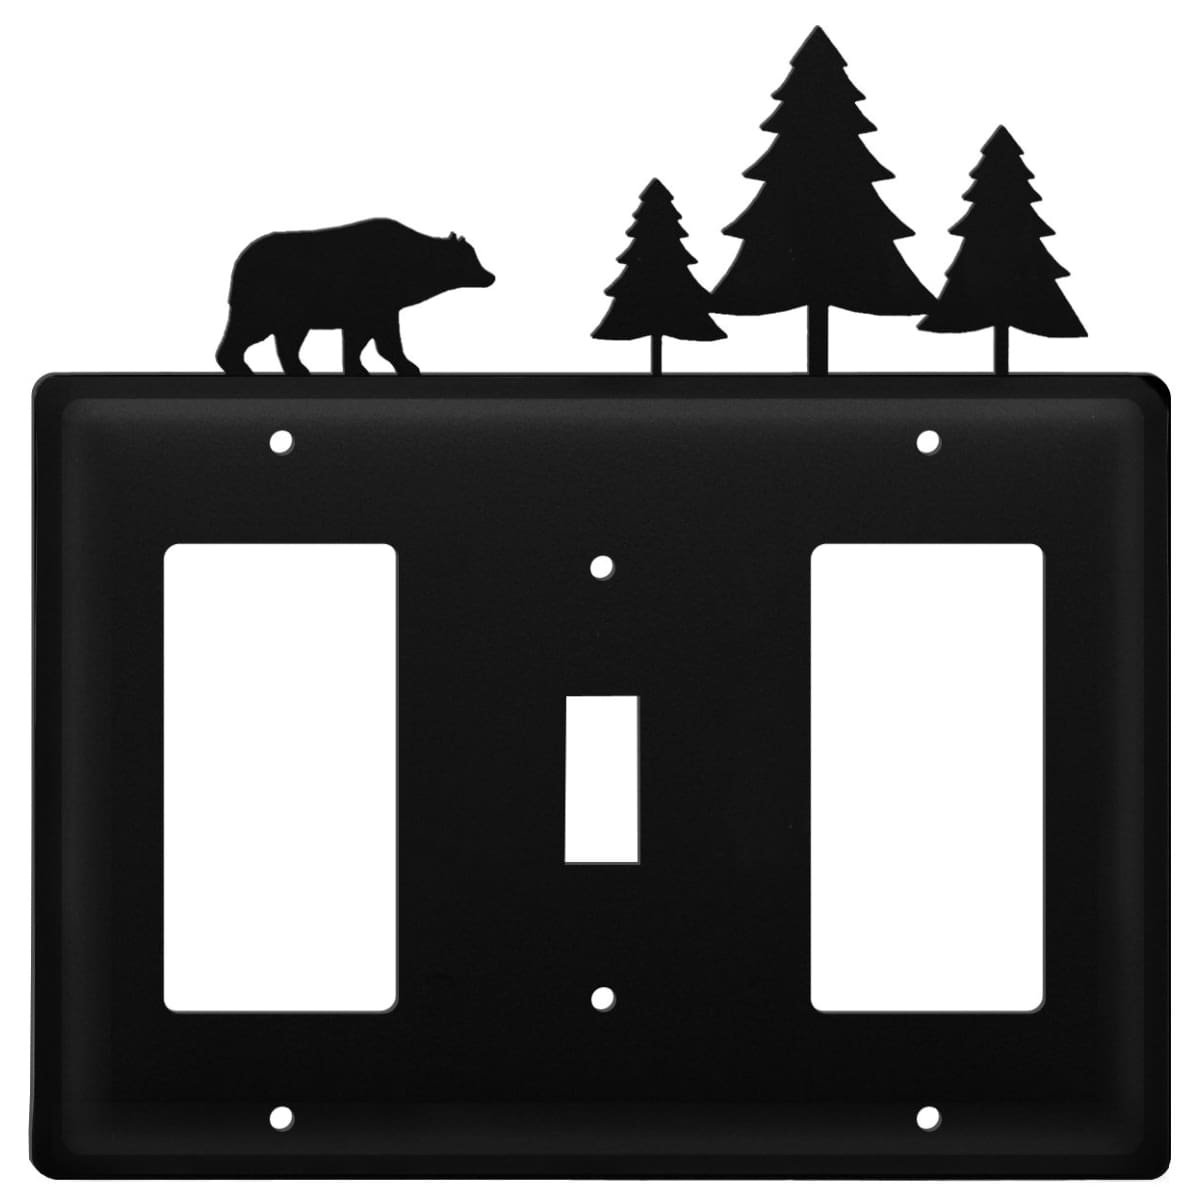 Triple Bear & Pine Trees Single GFI Switch and GFI Cover CUSTOM Product